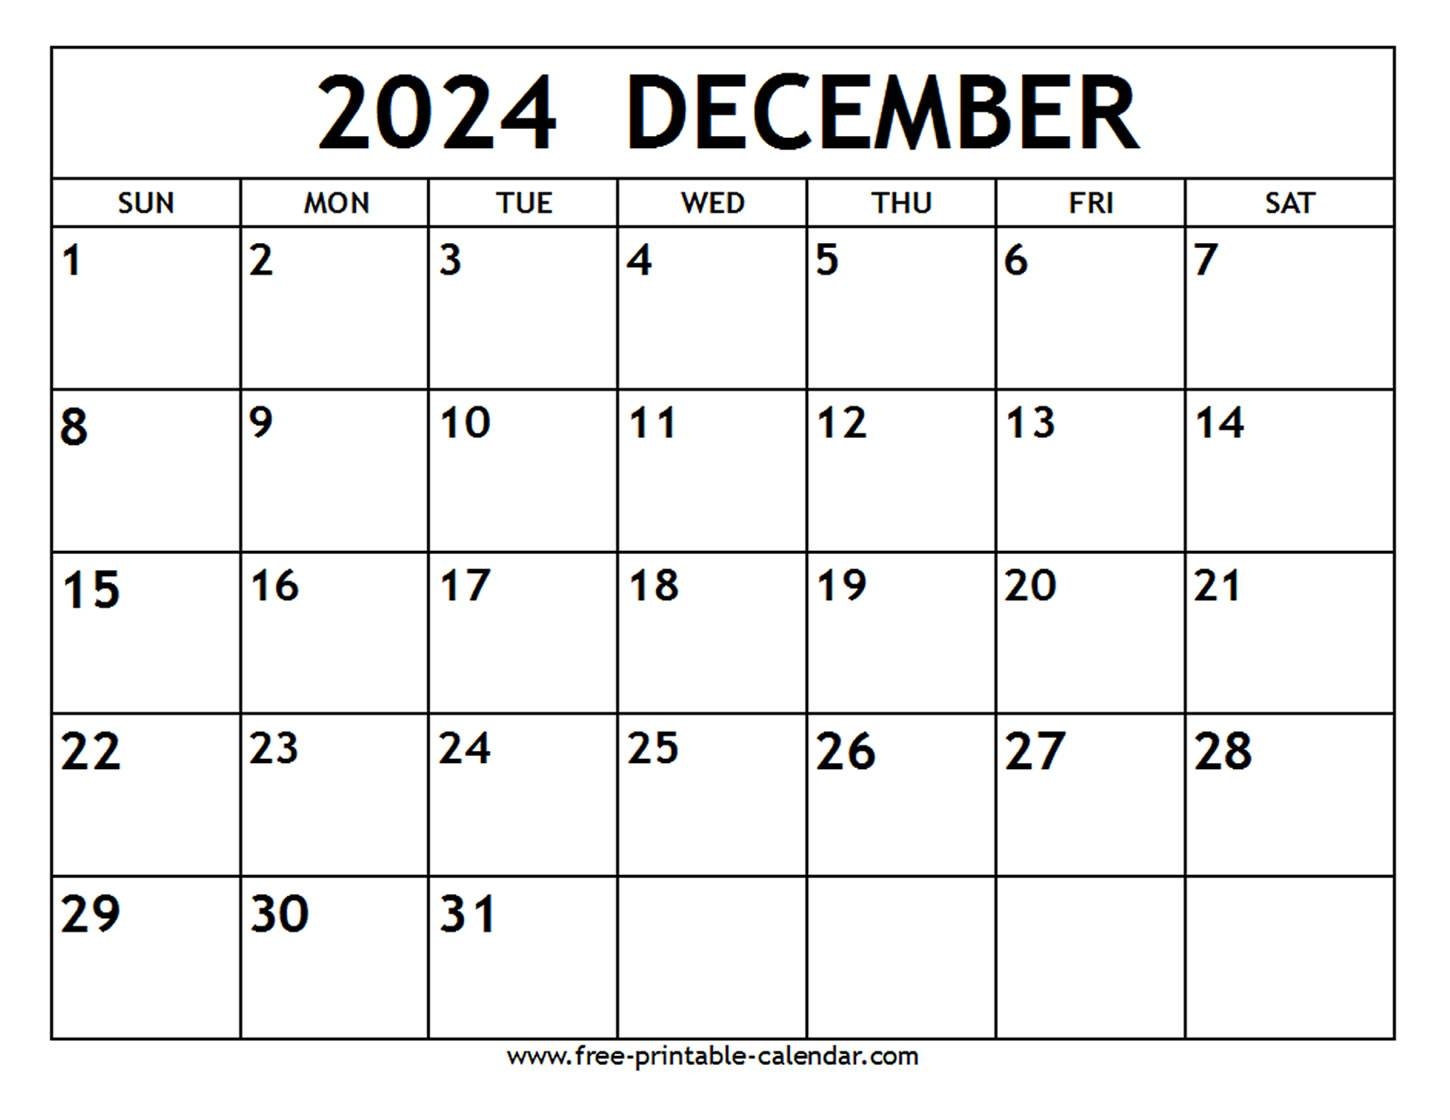 December 2024 Calendar - Free-Printable-Calendar with Free Printable Calendar 2024 Dec